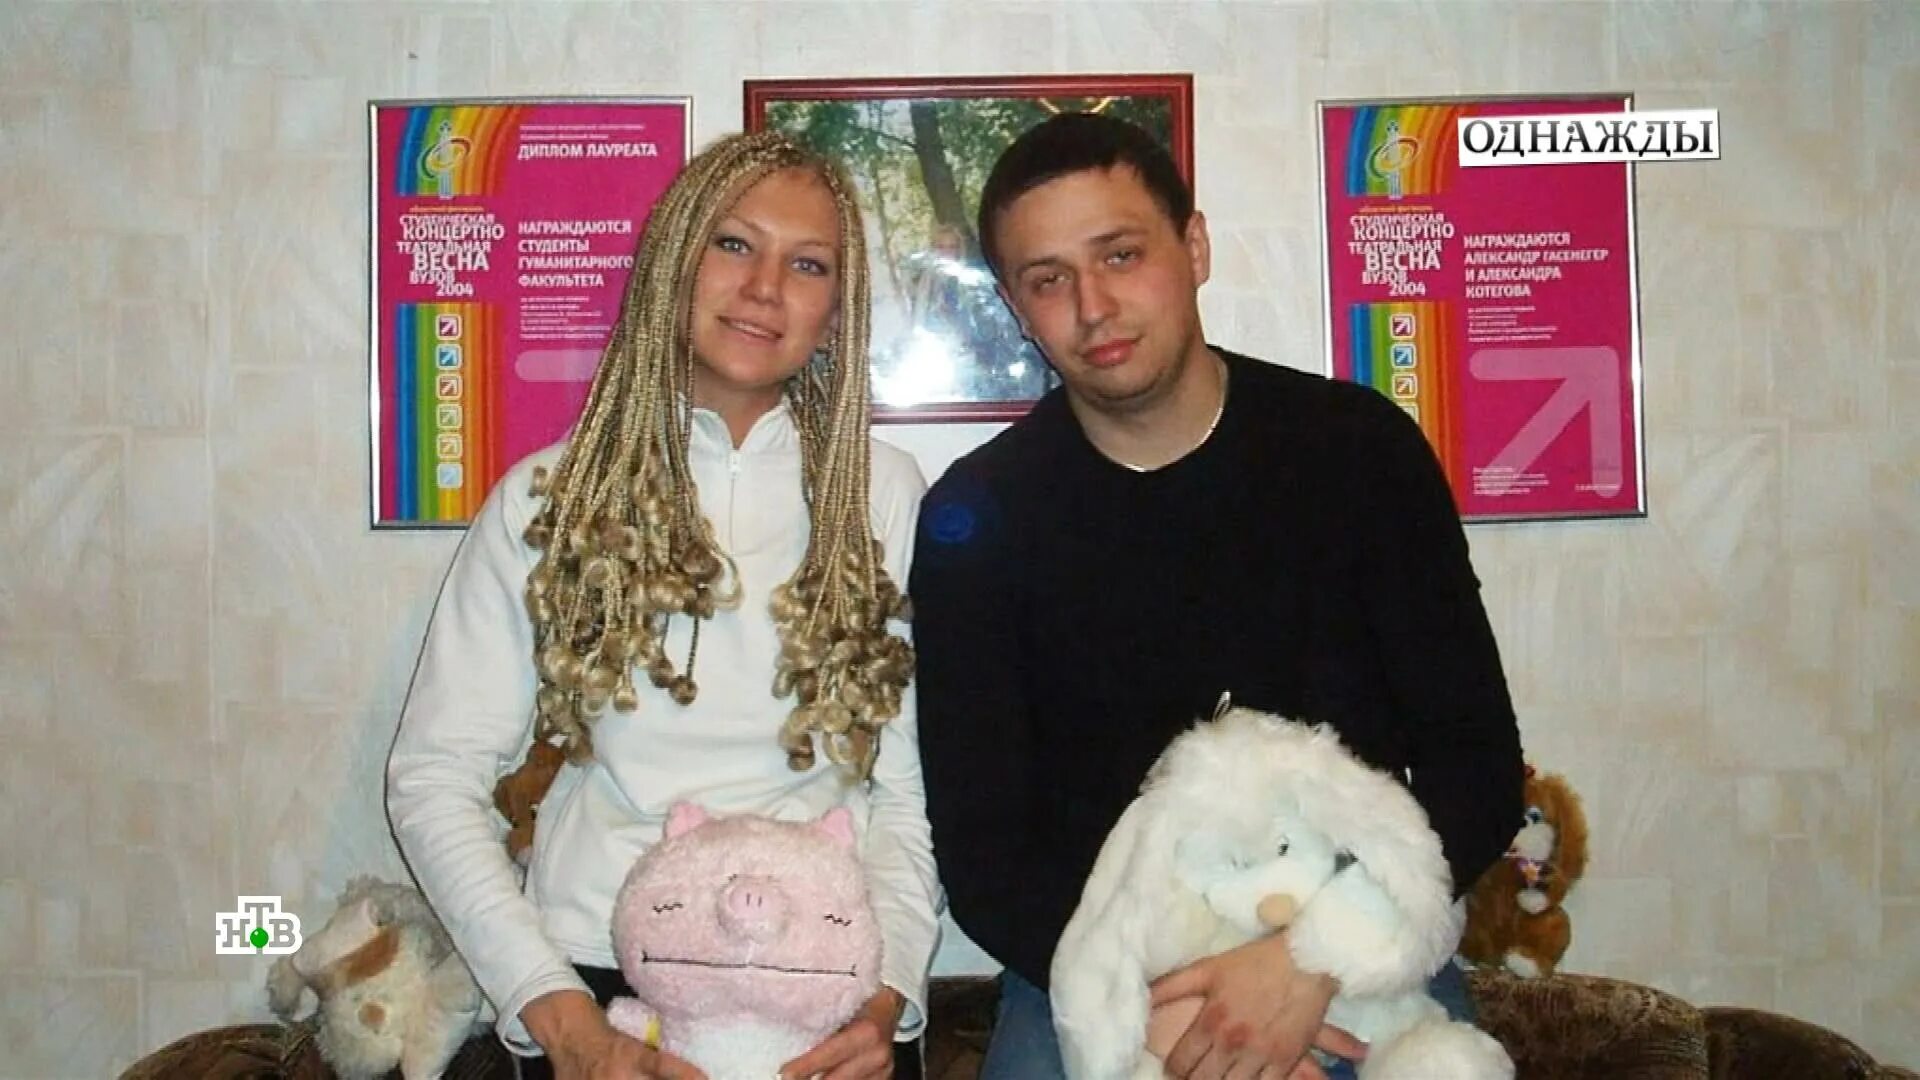 Жена Олега Верещагина. Верещагин с женой. Жена олега верещагина фото